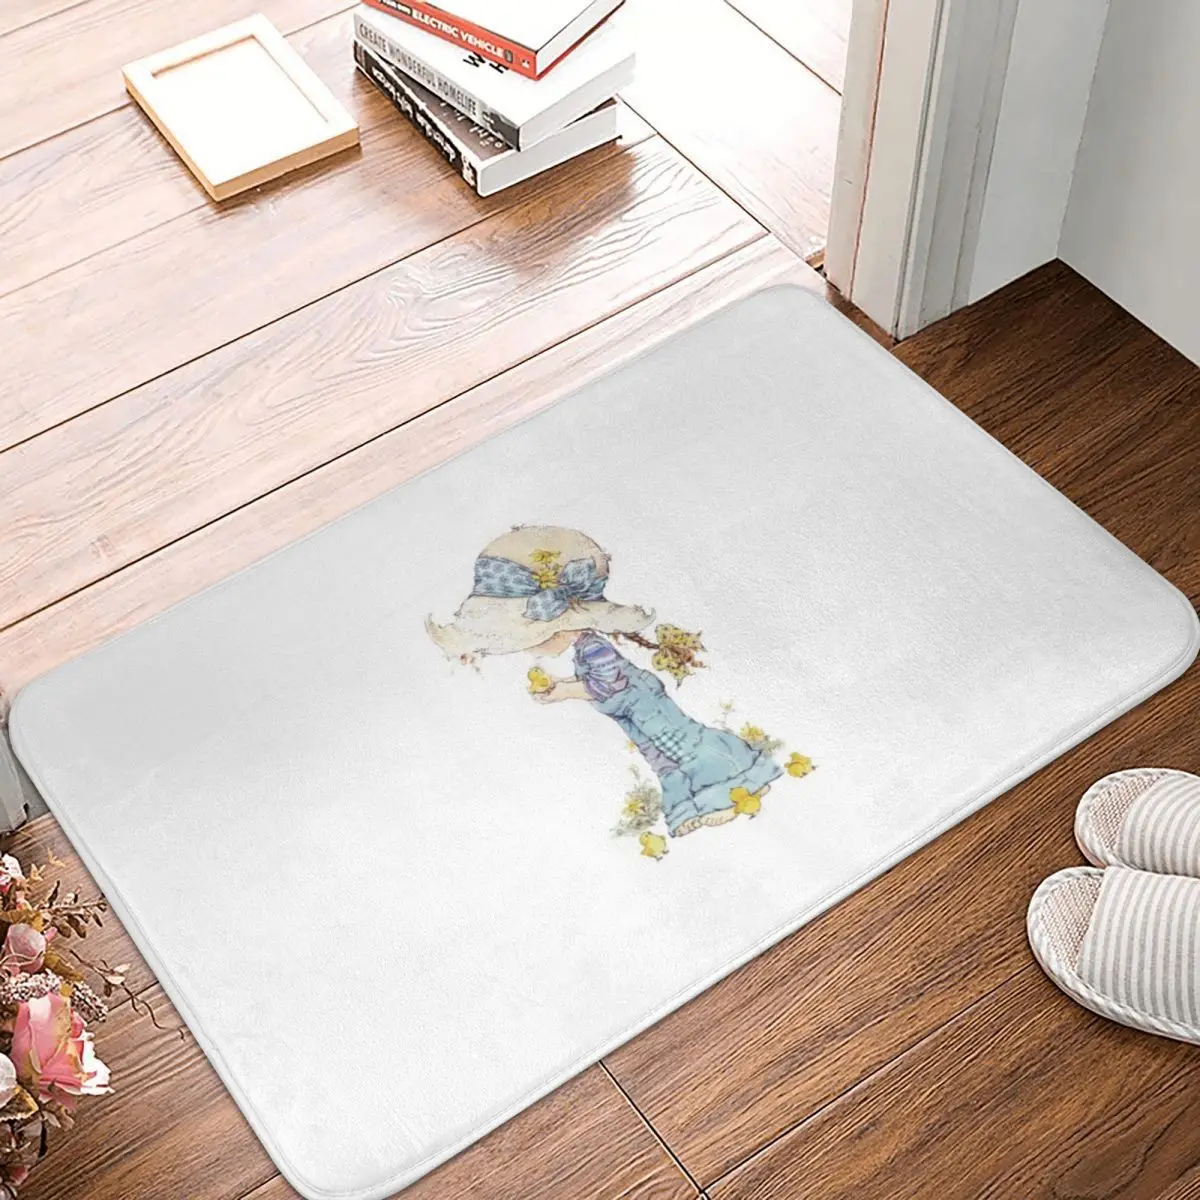 

Sarah Kay With Chick Polyester Doormat Rug carpet Mat Footpad Anti-slip dustEntrance Kitchen Bedroom balcony Cartoon